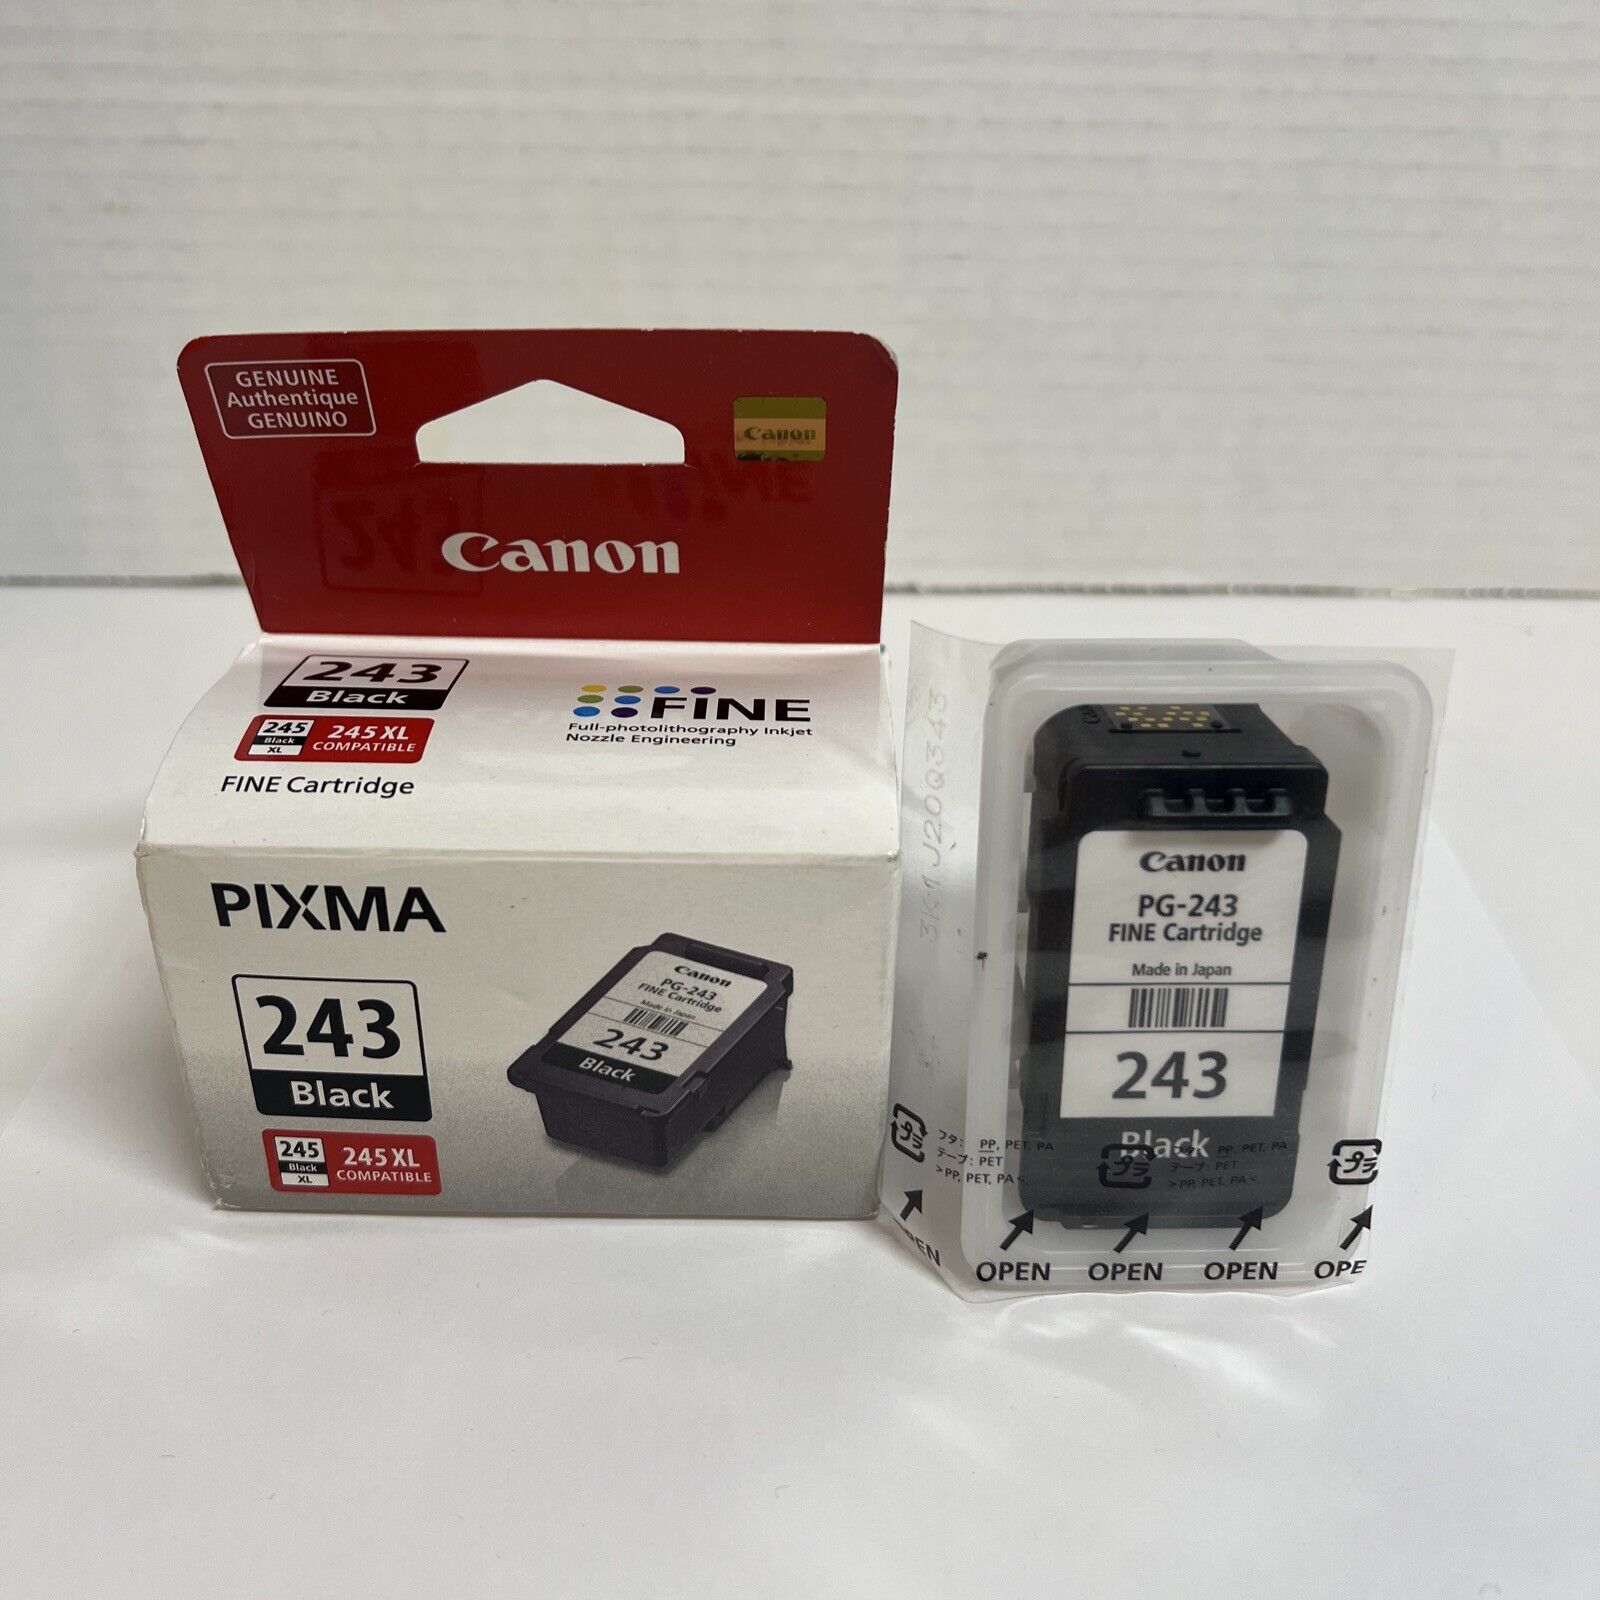 Genuine Canon PIXMA PG-243 Black Ink Fine Cartridges (2) NEW